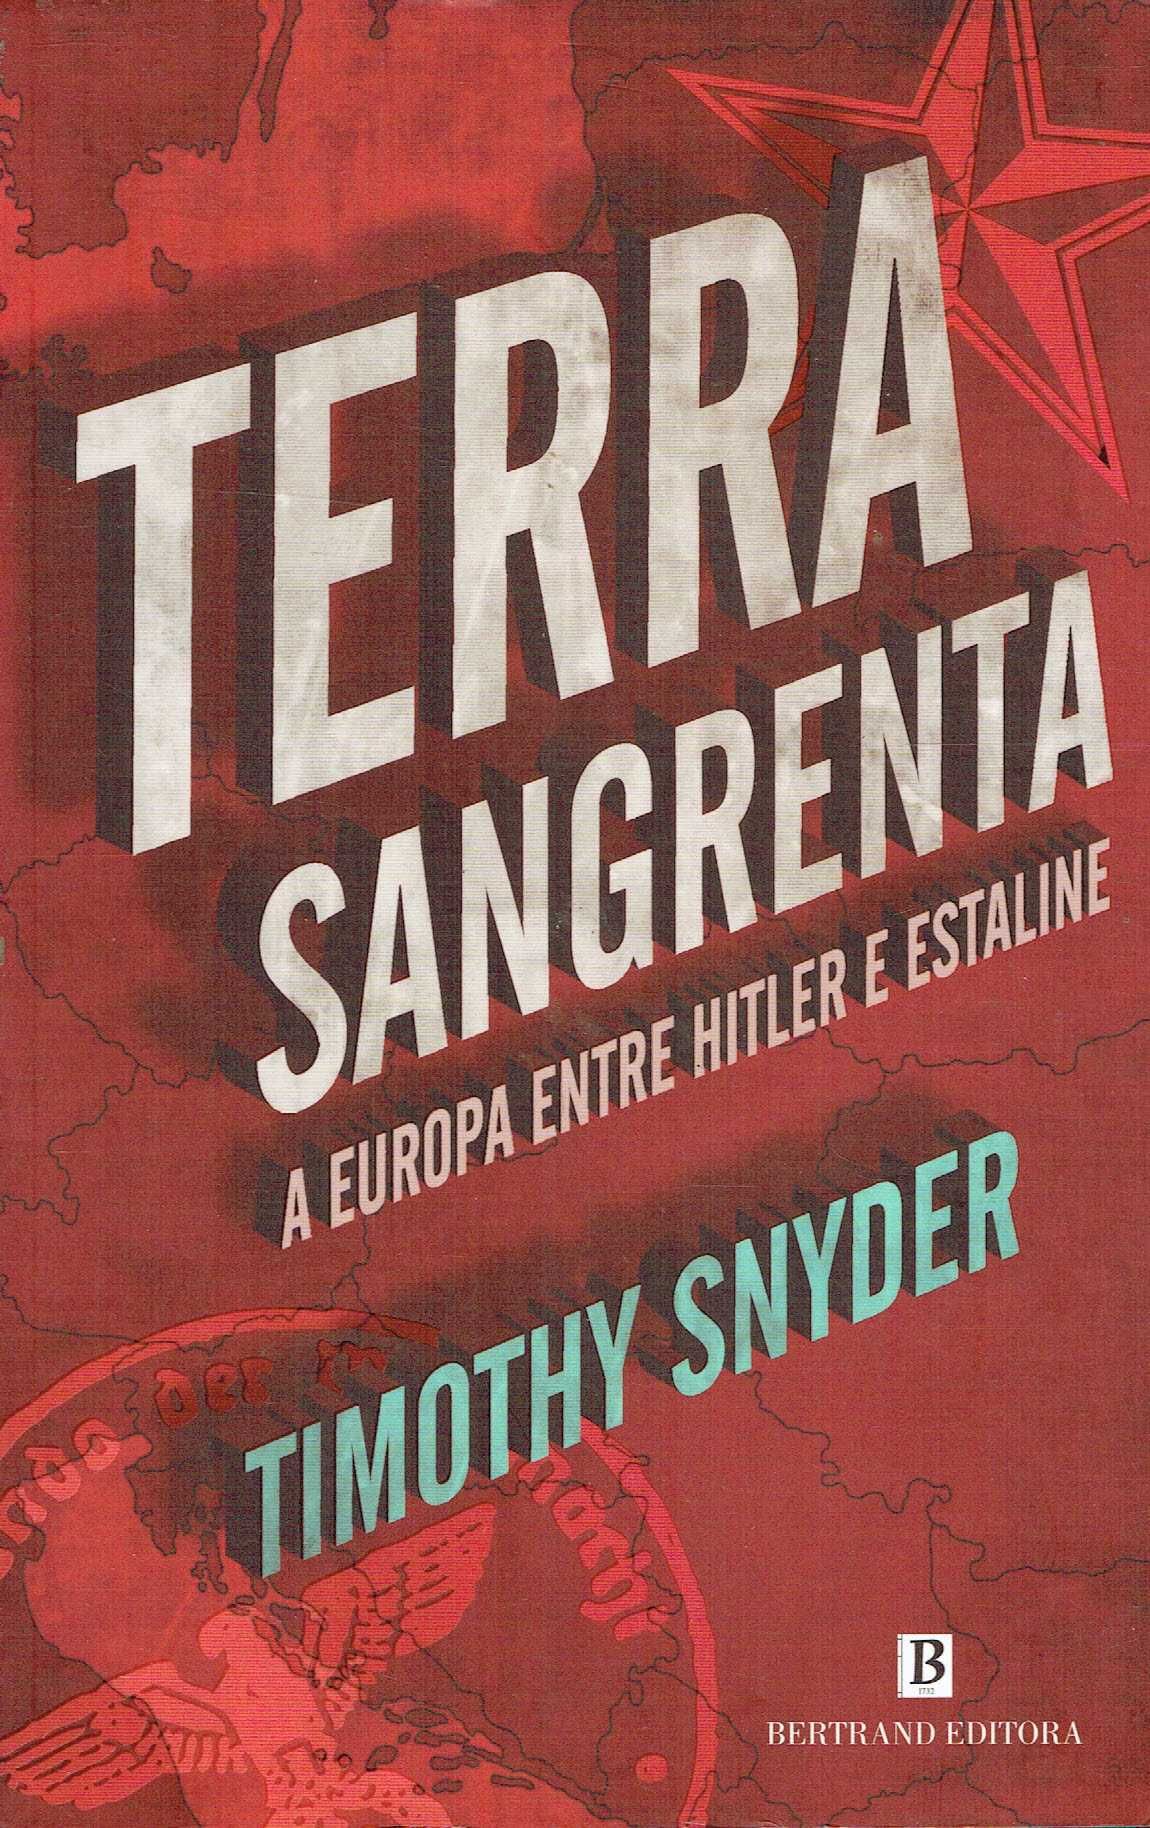 15194

Terra Sangrenta
de Timothy Snyder